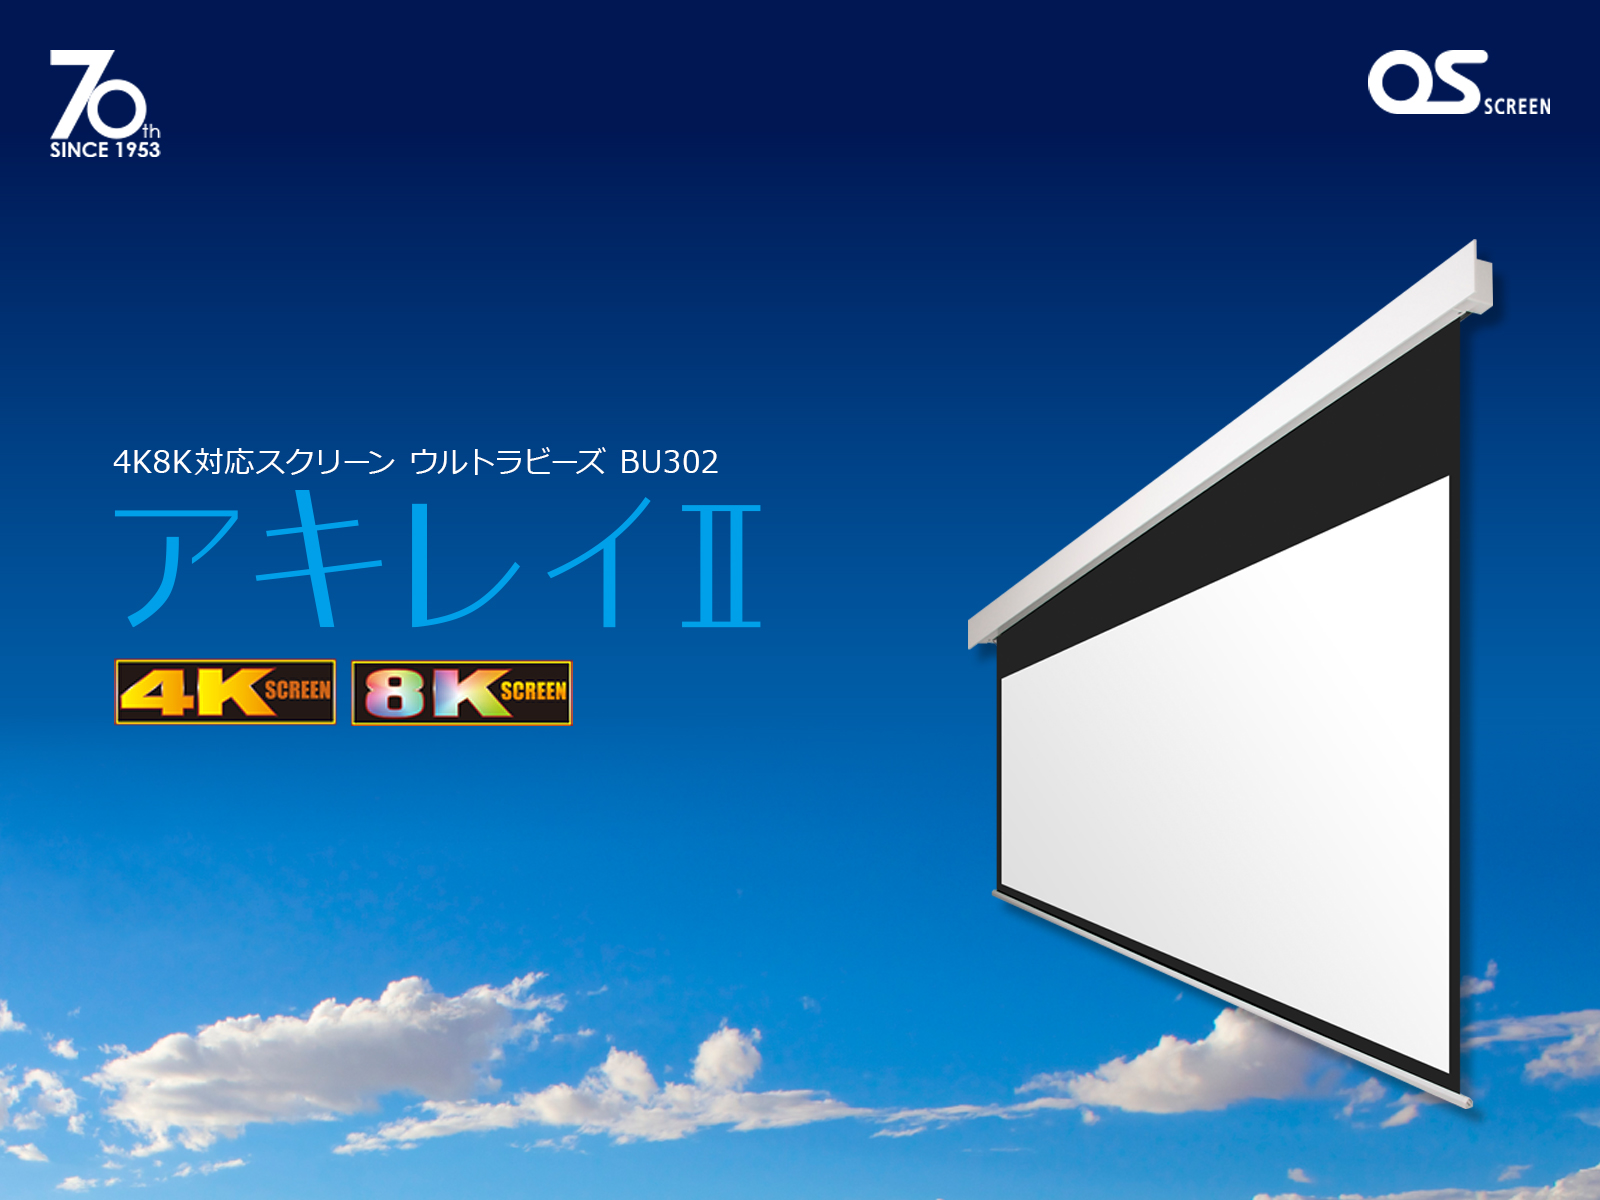 4K8K対応スクリーン「アキレイⅡ」をオーエス東京ビル・ショールームに特別展示中